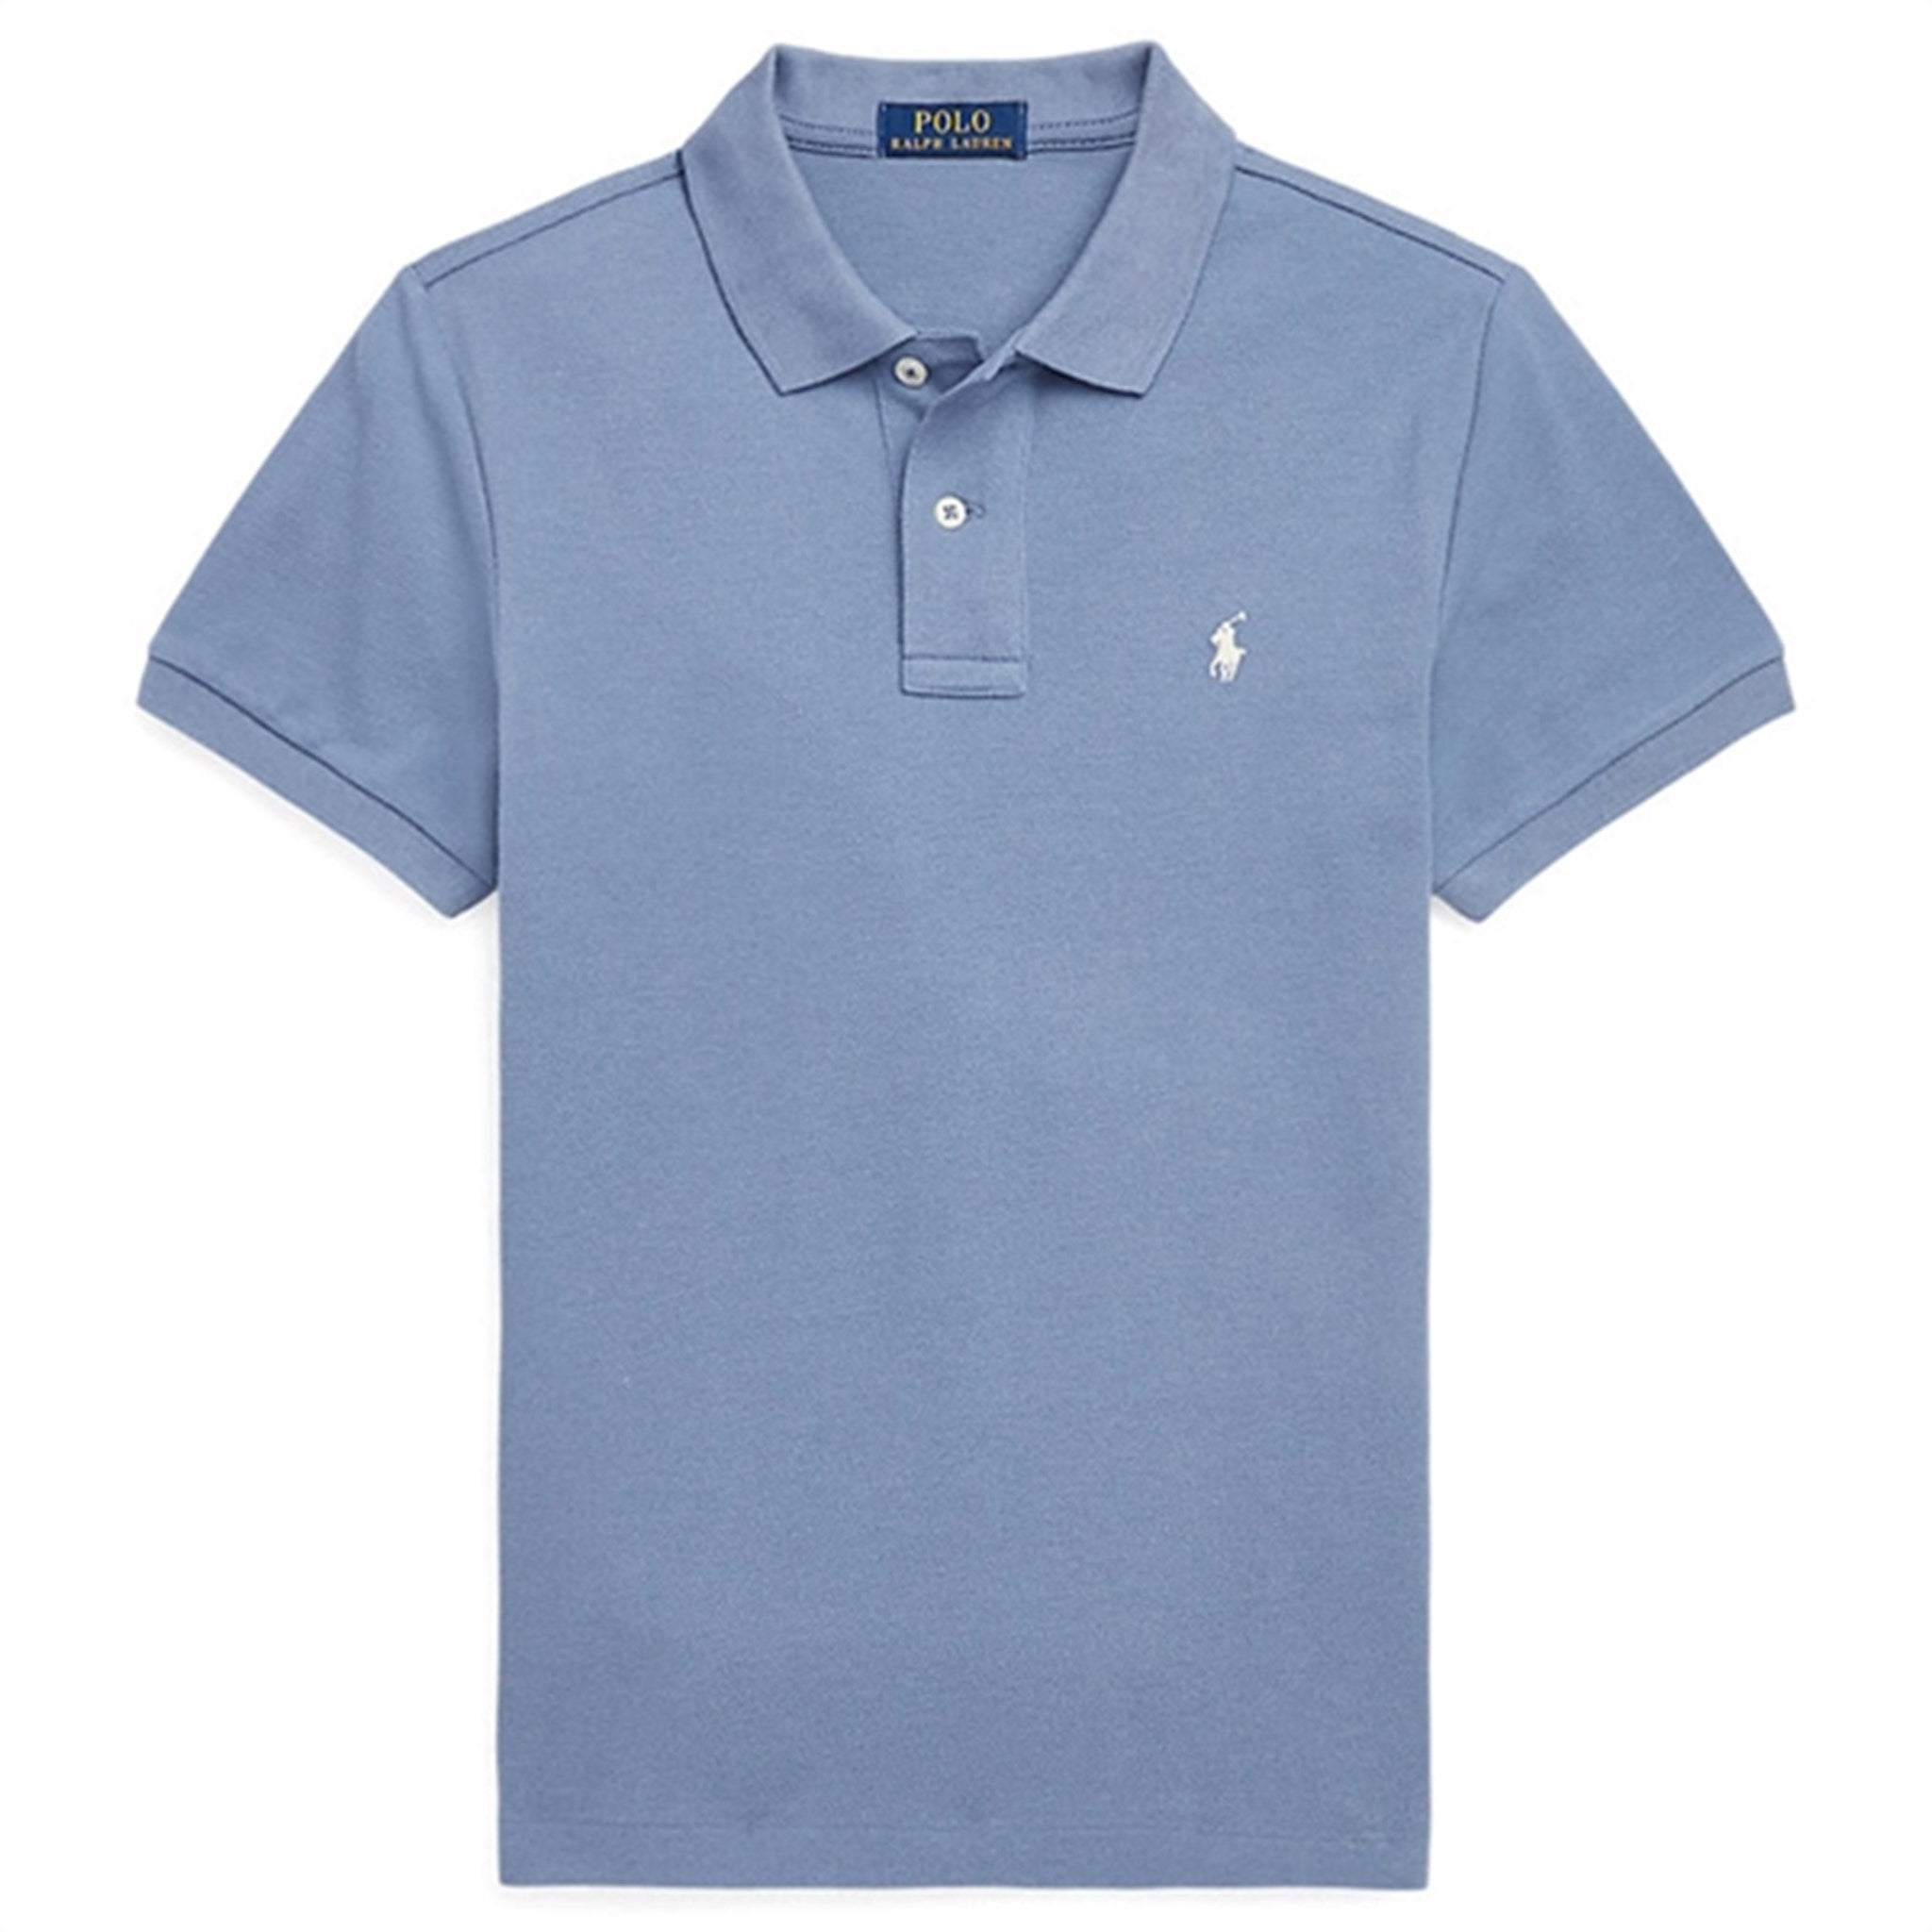 Polo Ralph Lauren Polo T-shirt Blue